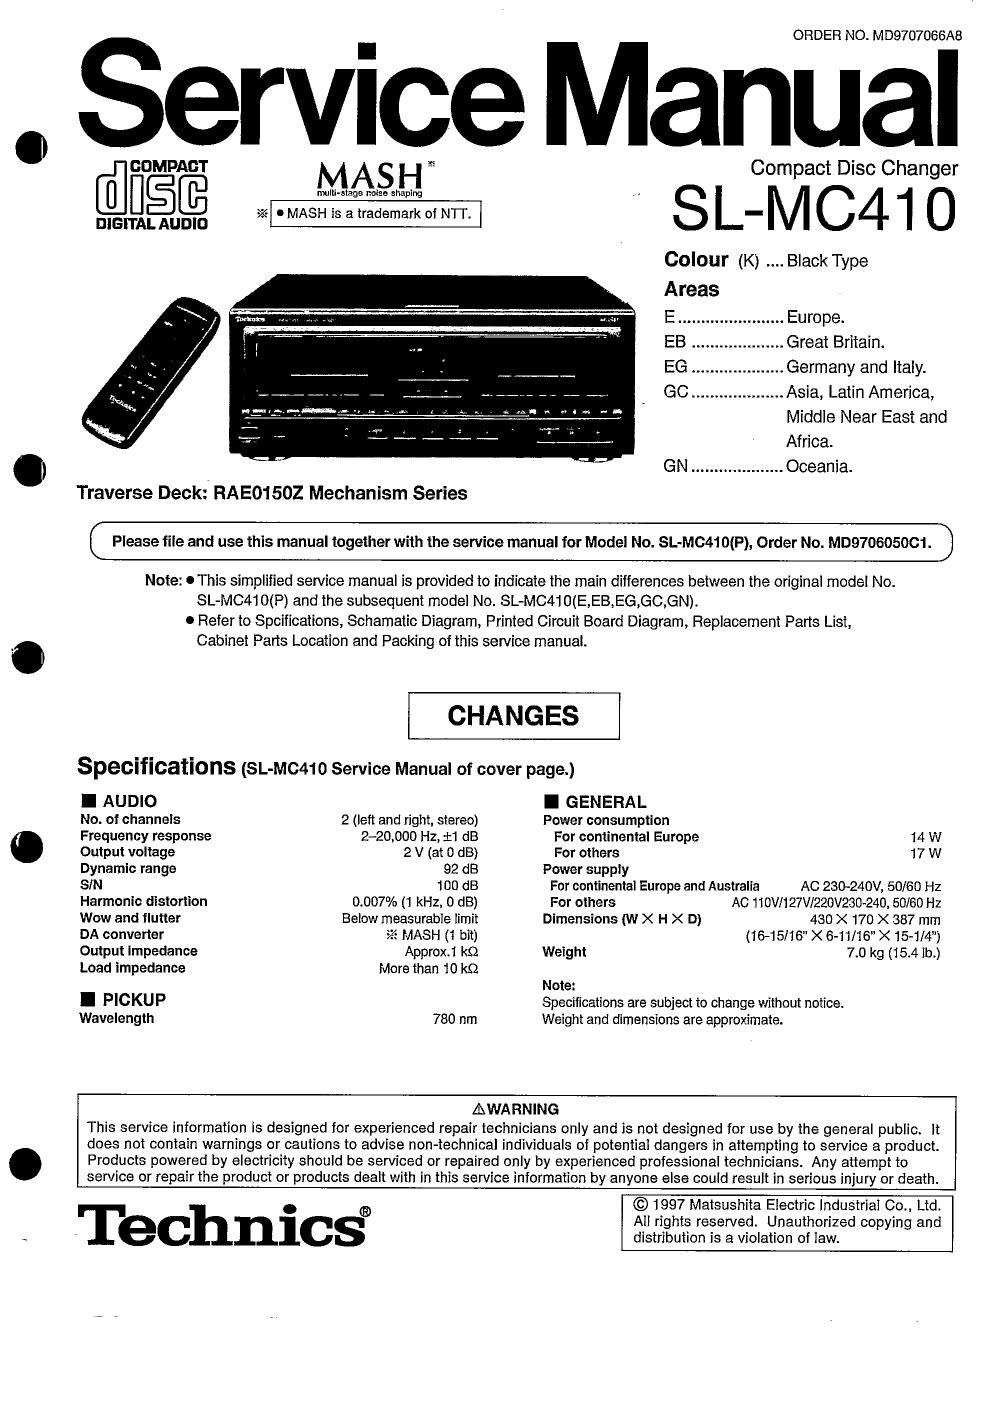 panasonic sl mc 410 service manual